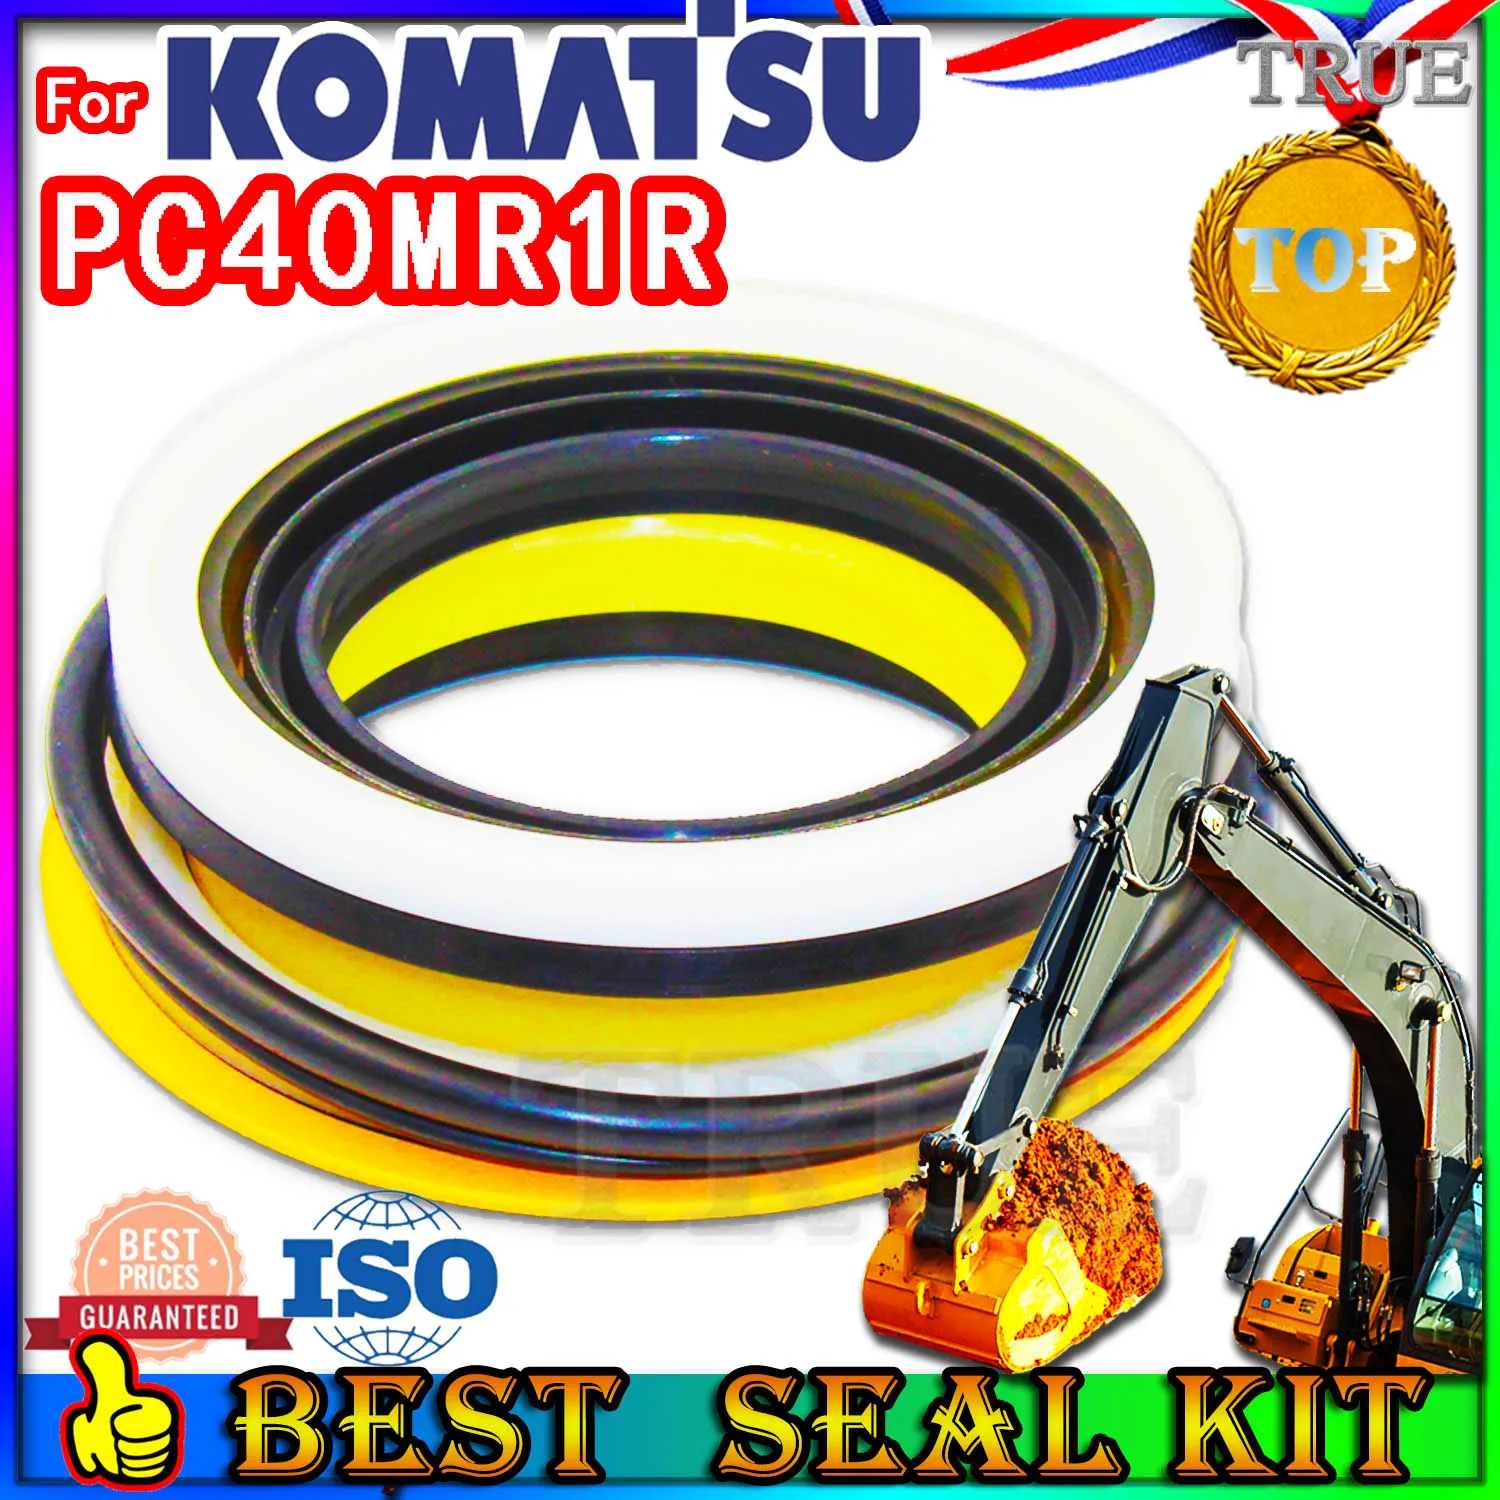 

For KOMATSU PC40MR1R Oil Seal Repair Kit Boom Arm Bucket Excavator Hydraulic Cylinder Heavy Master Excavating Machinery Floating